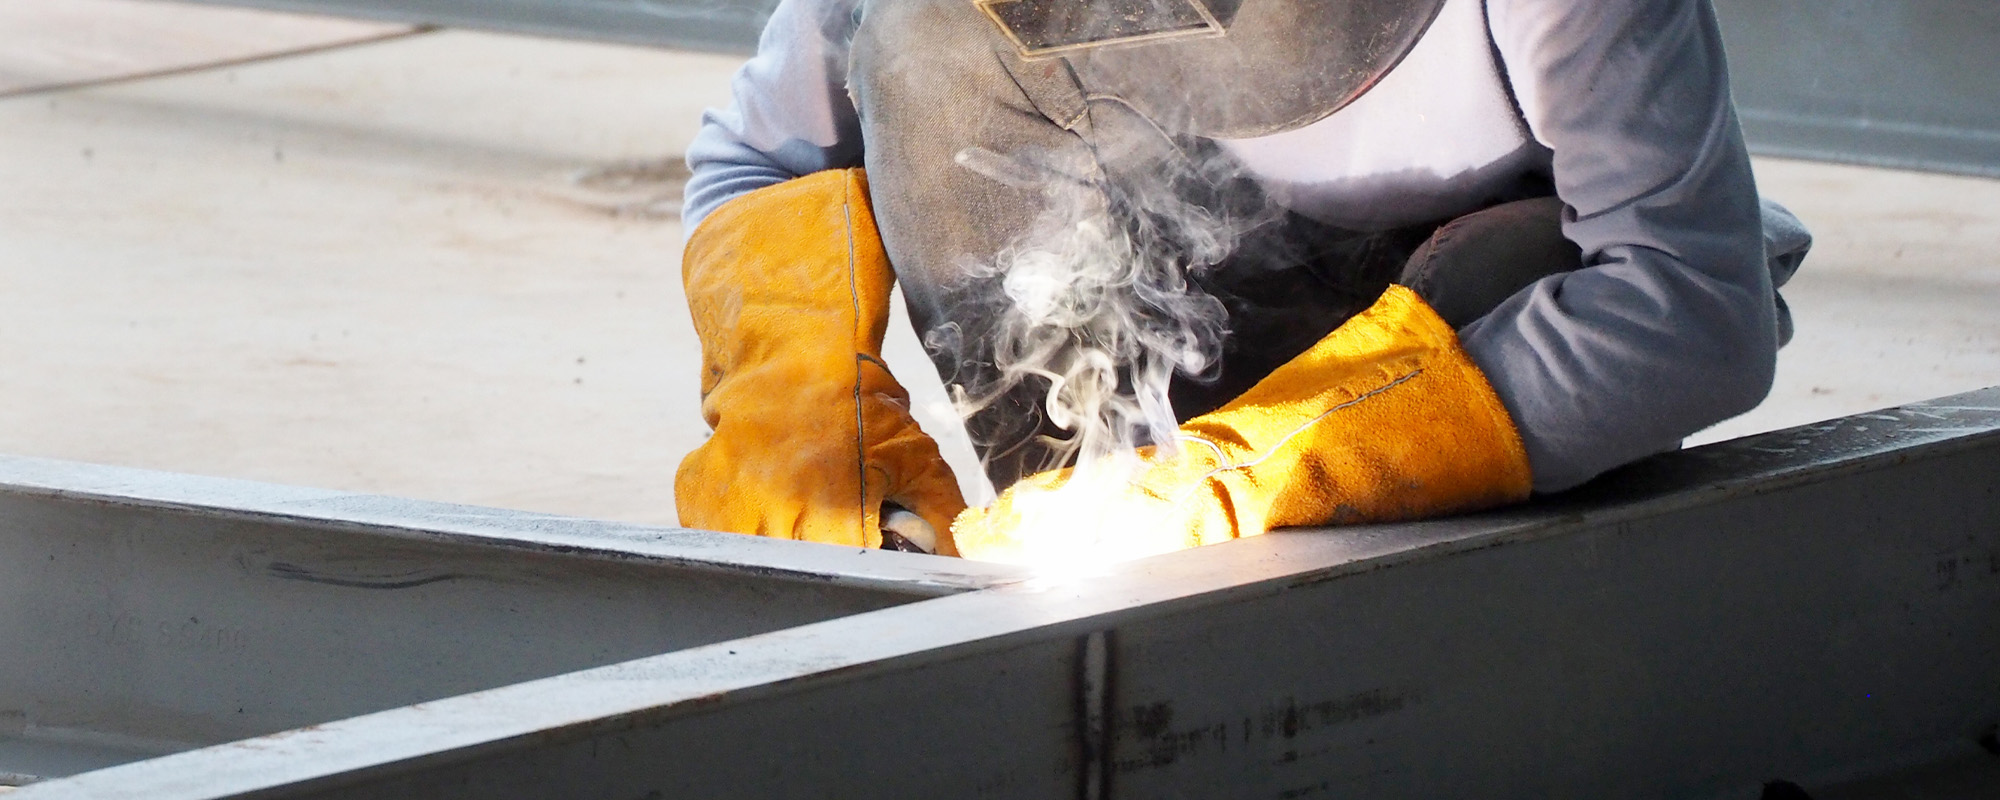 welding work worker with protective welding metal on construction